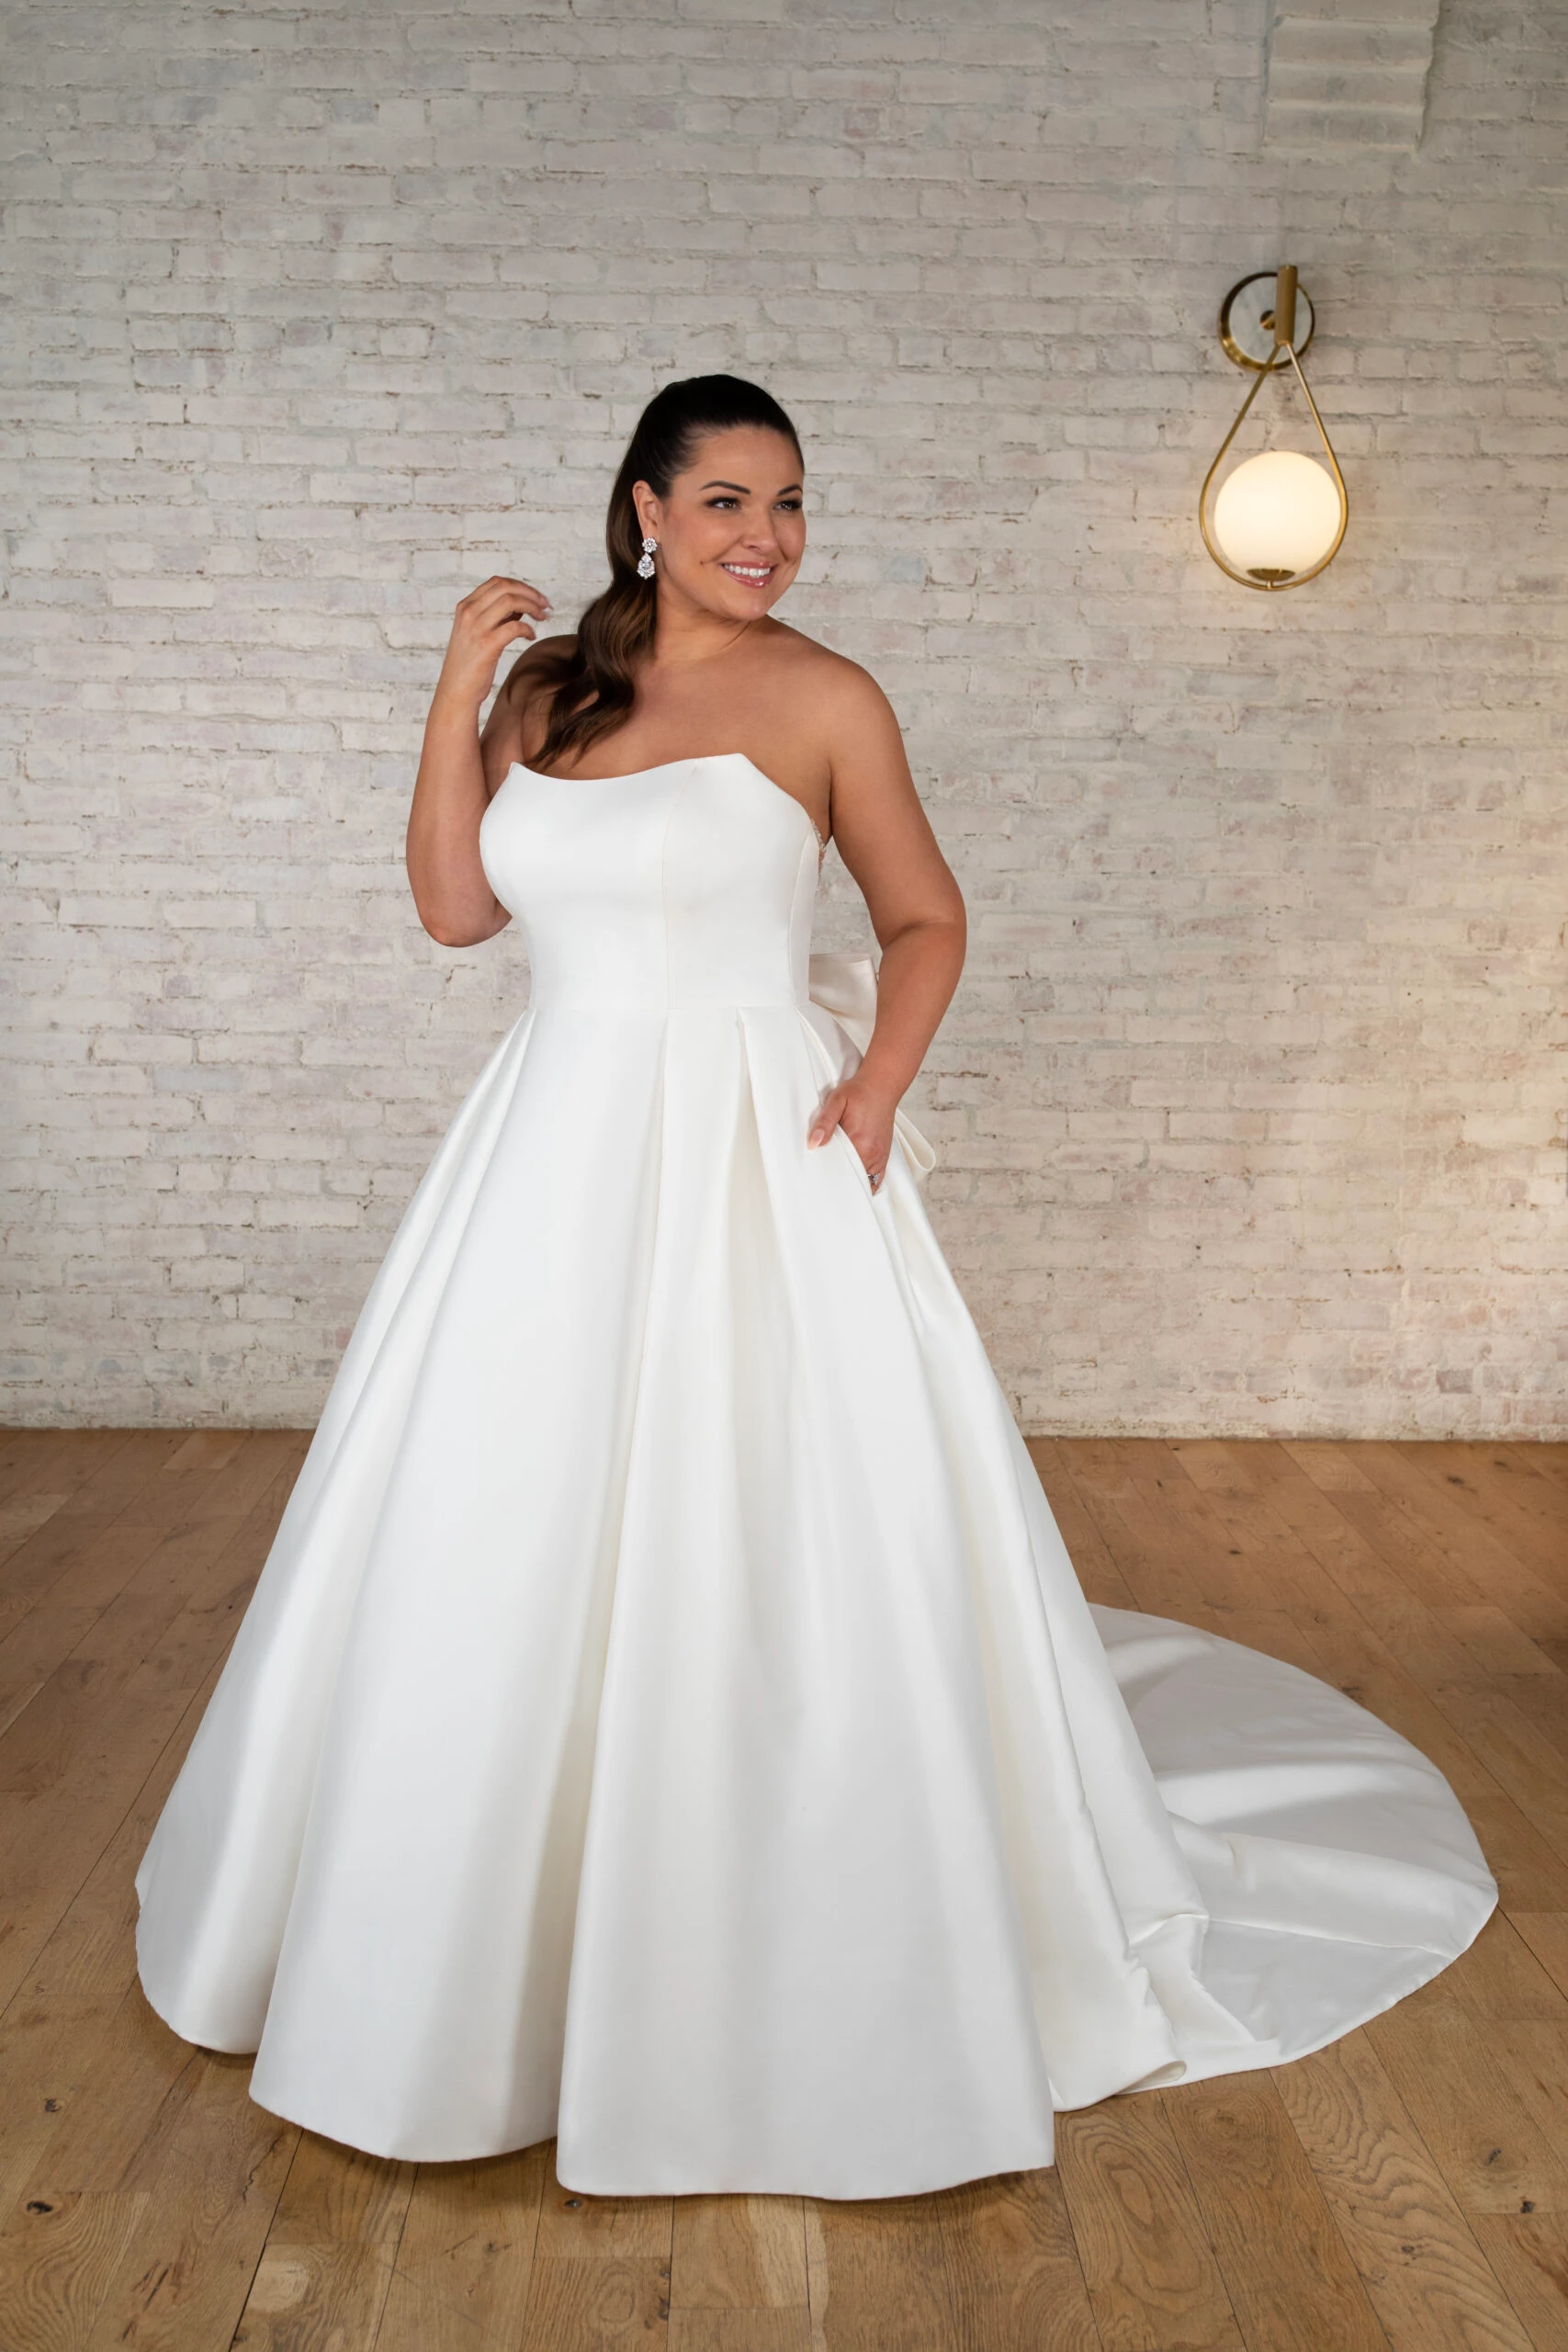 Bride wearing a strapless plus size wedding dress